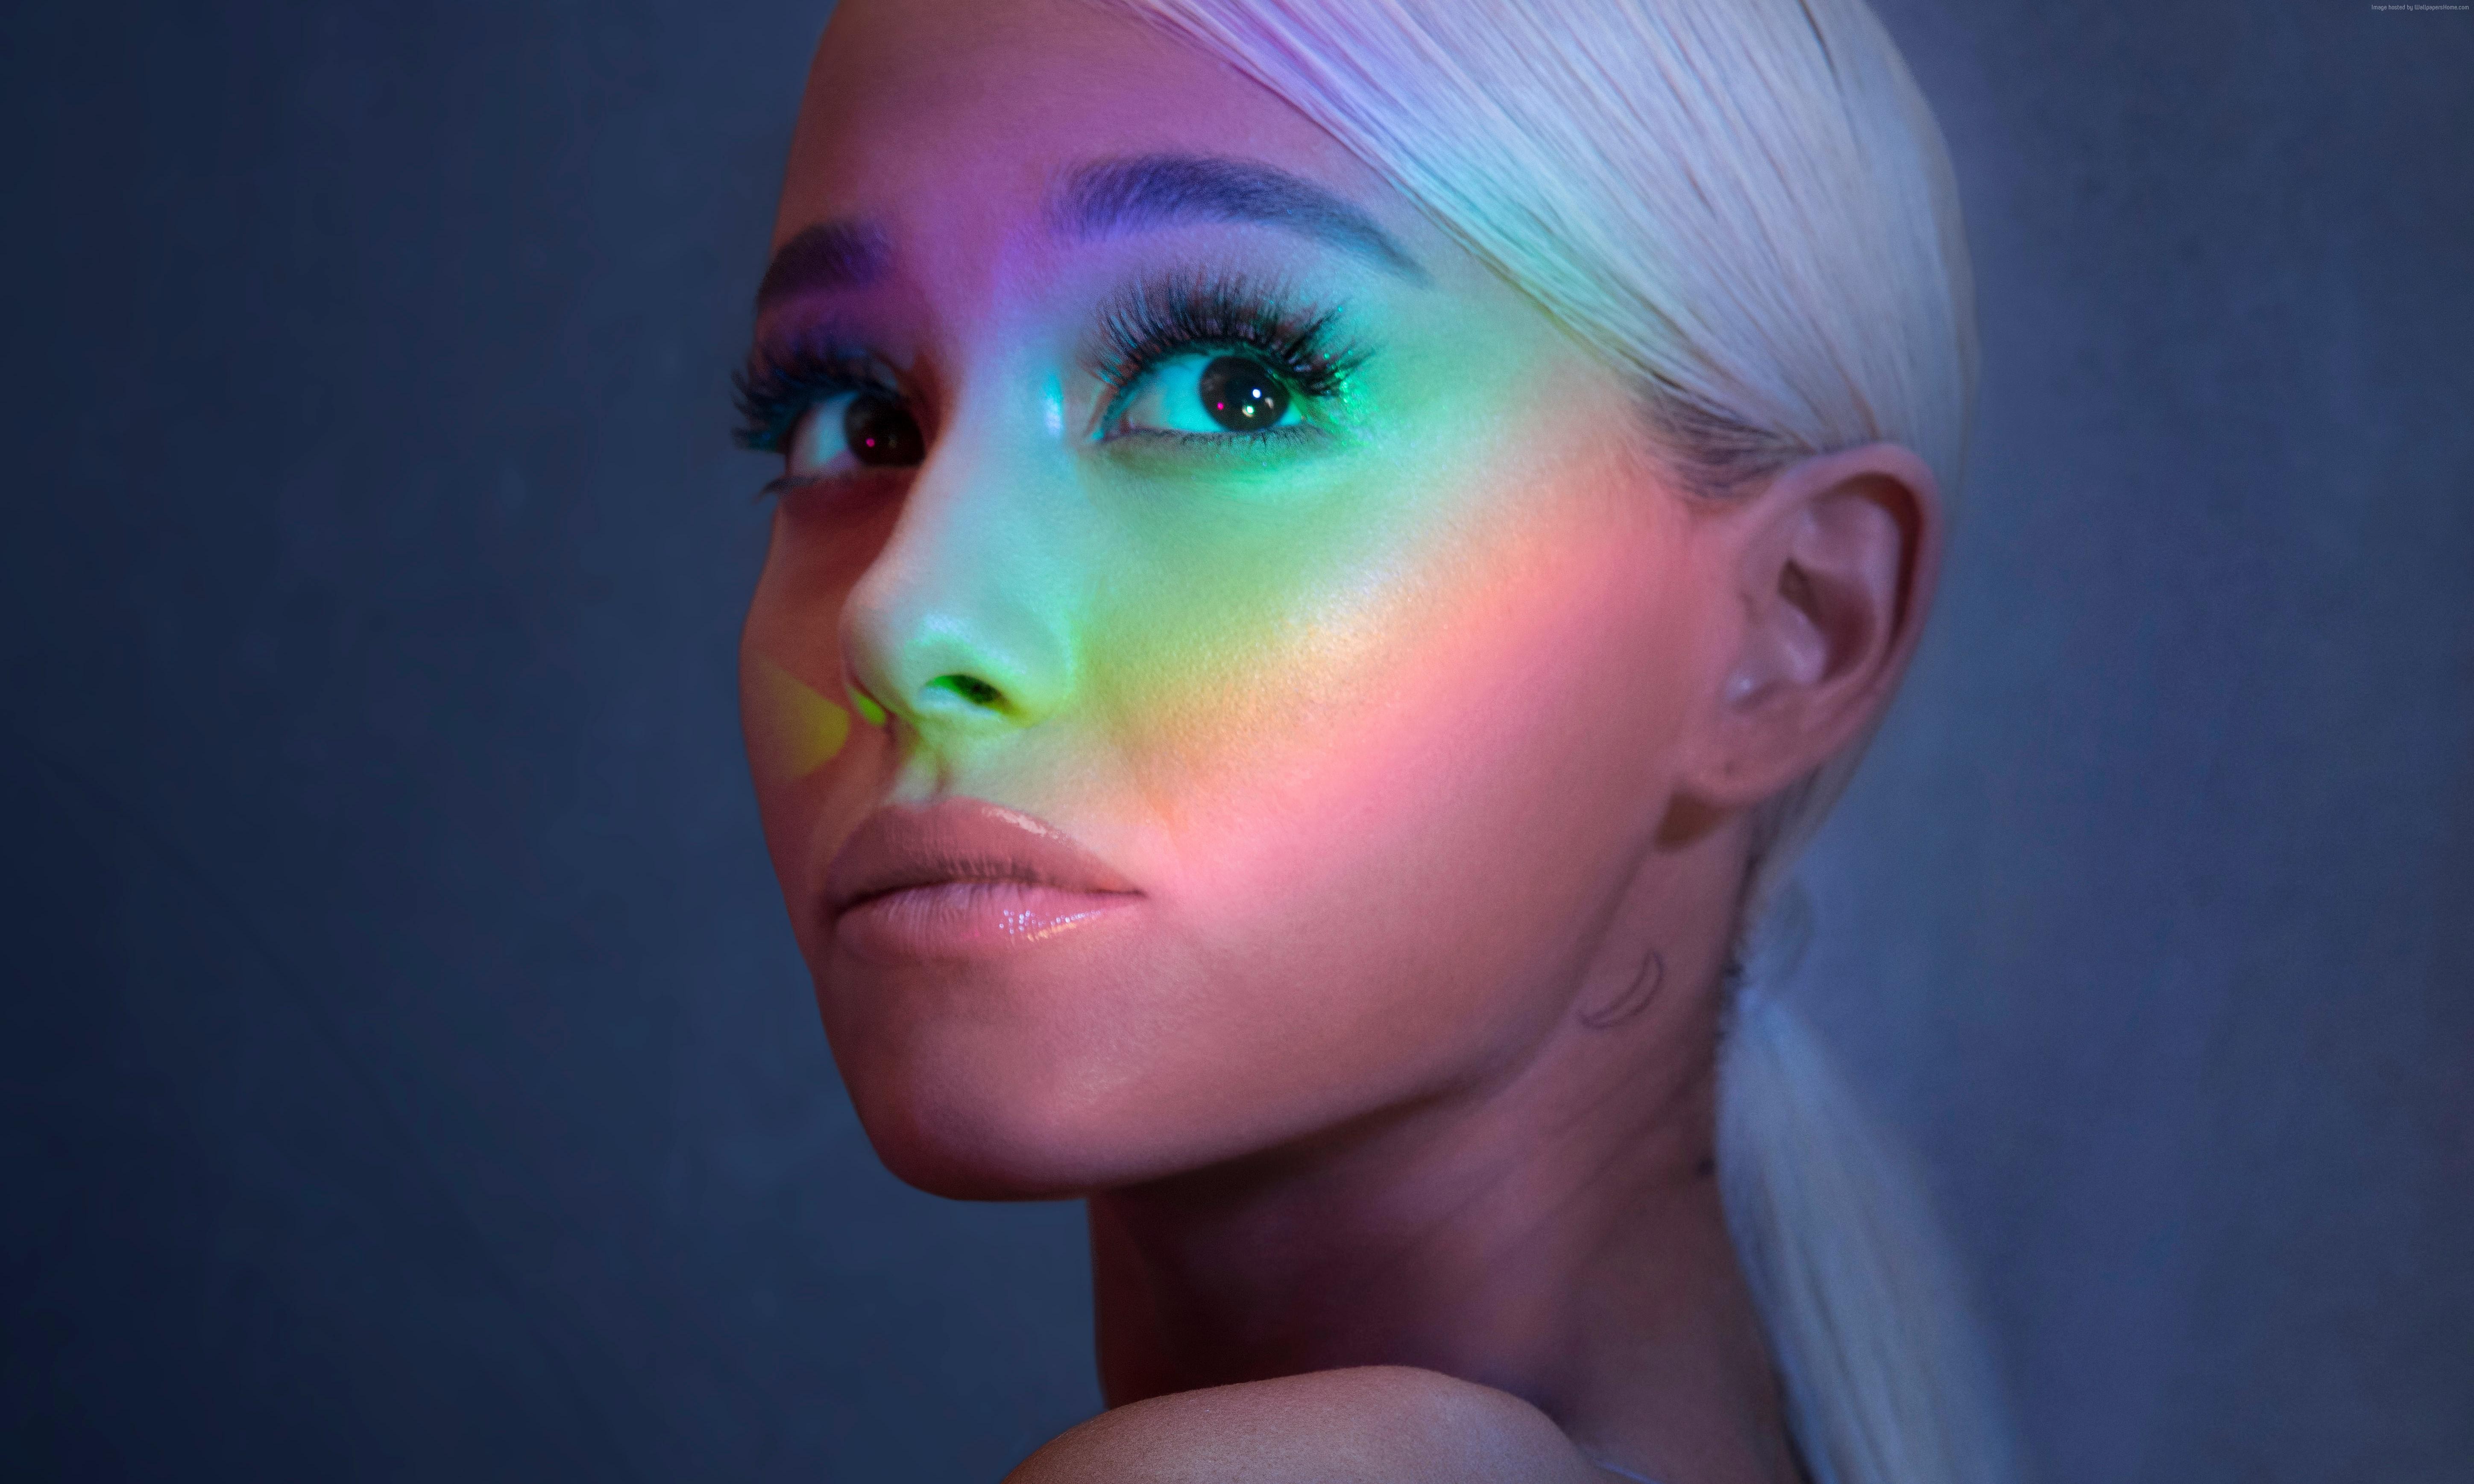 Ariana Grande Sweetener album photohoot 4k Ultra HD Wallpaper